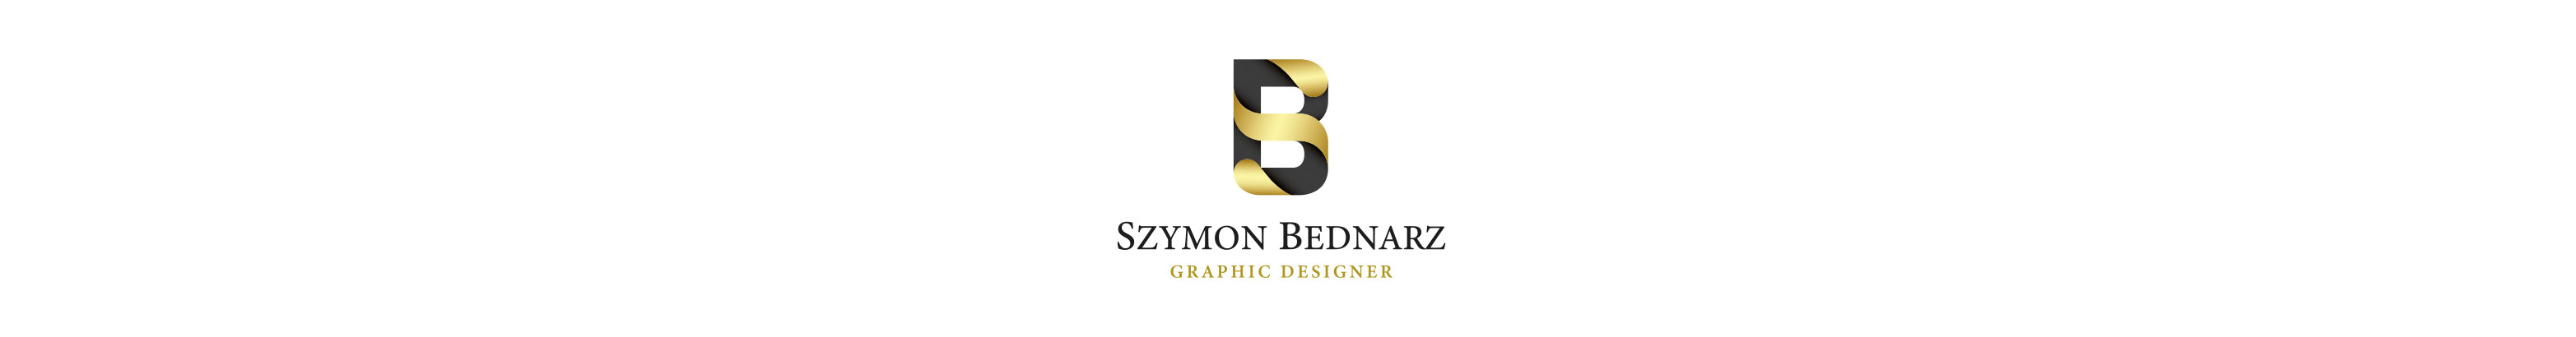 Szymon Bednarz's profile banner